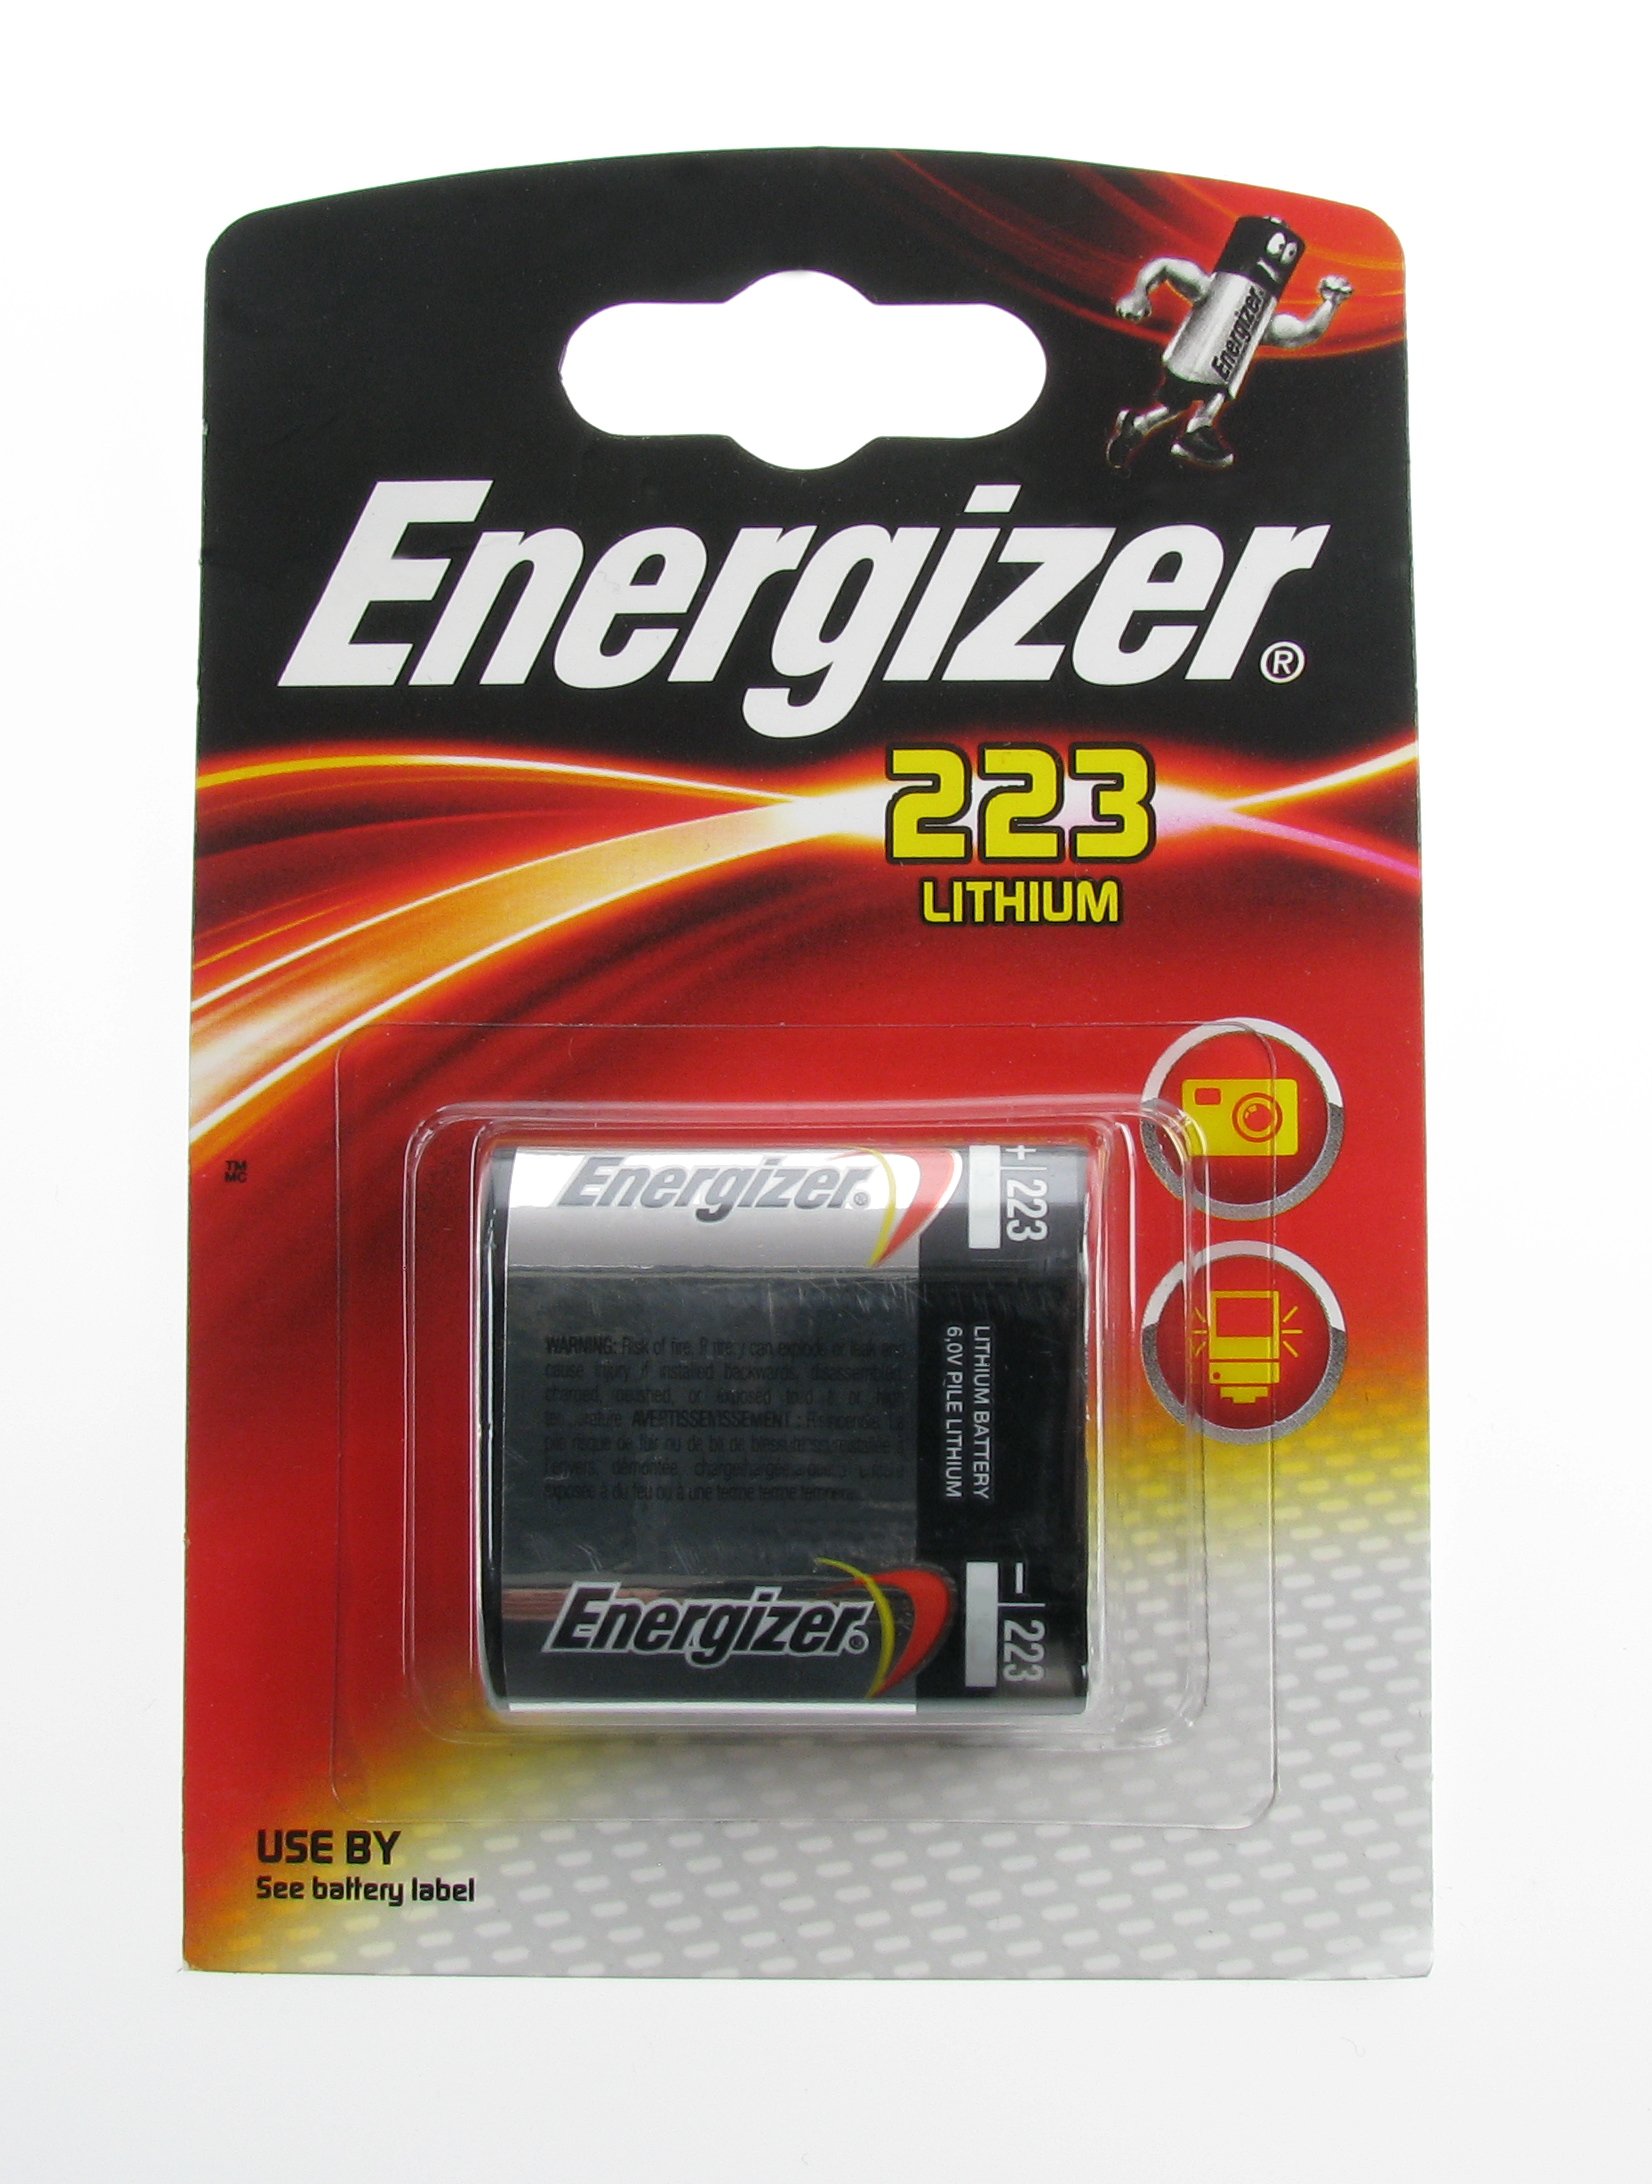 Energizer 223 Batterie